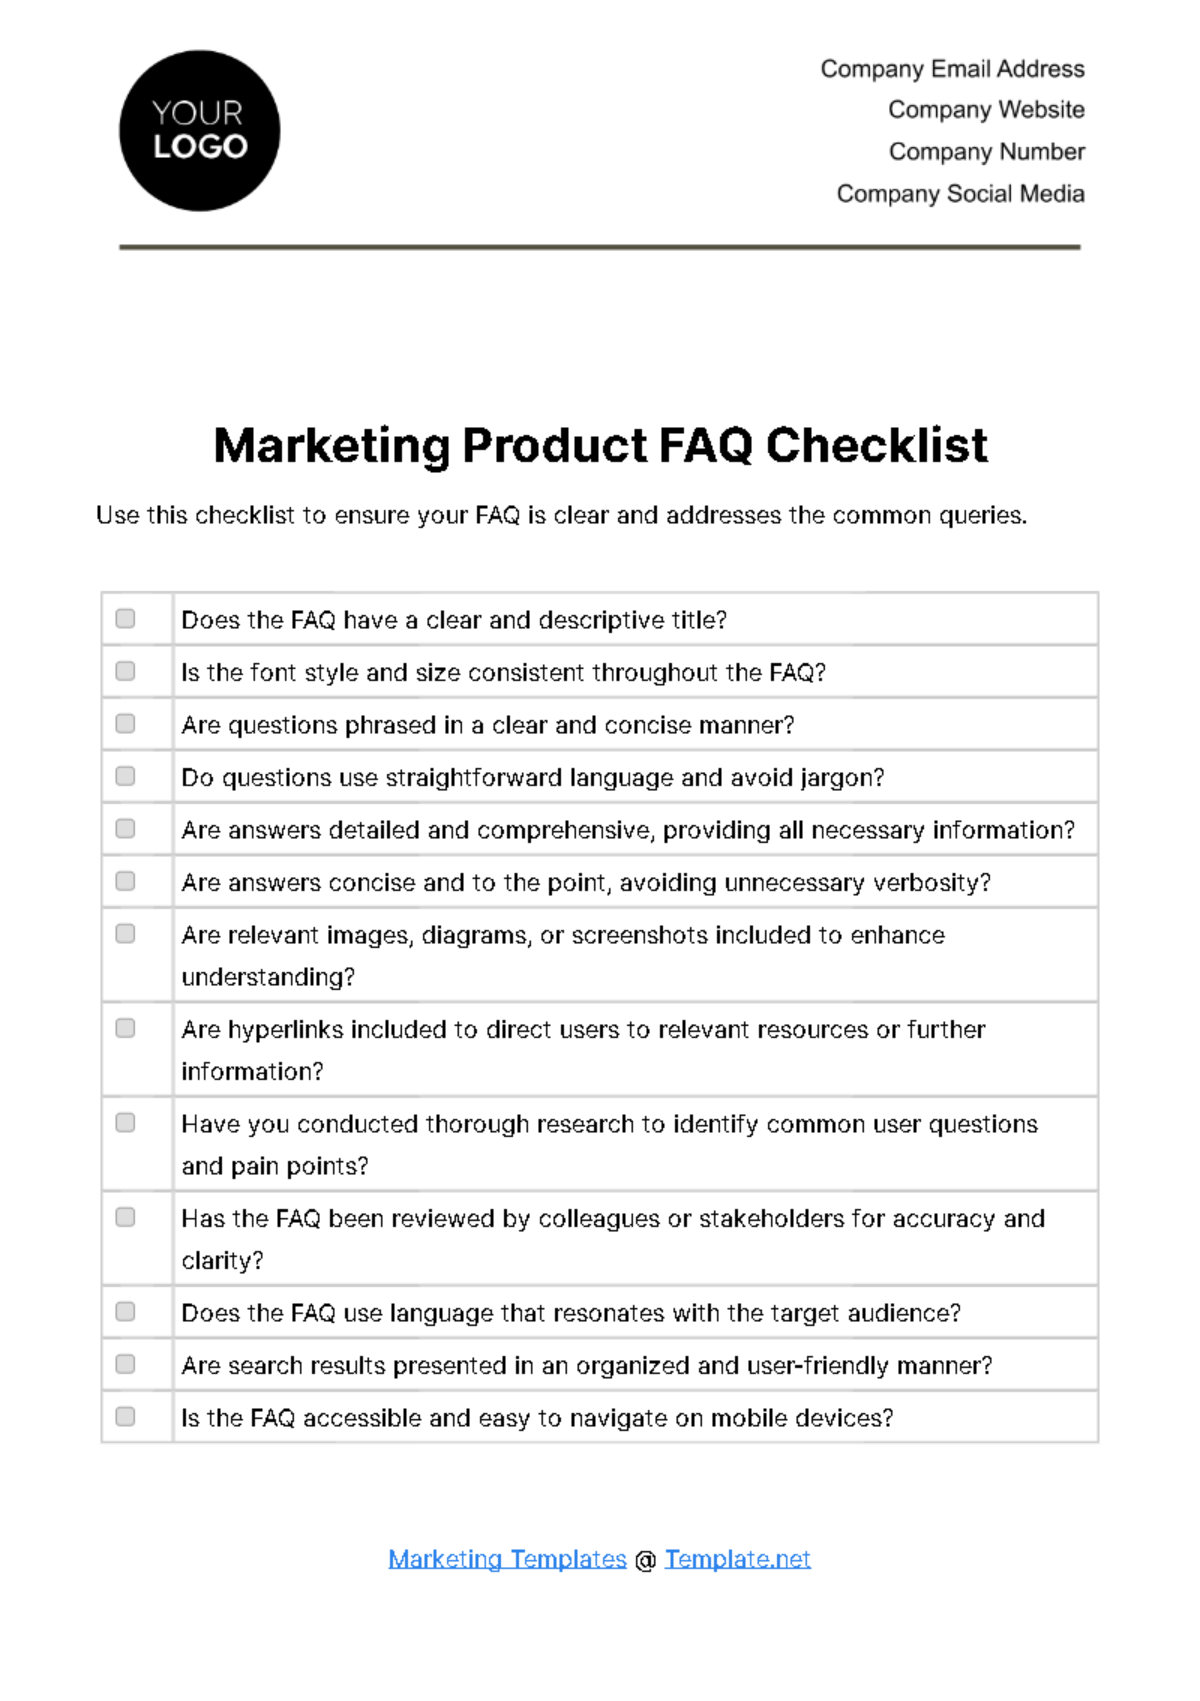 Marketing Product FAQ Checklist Template